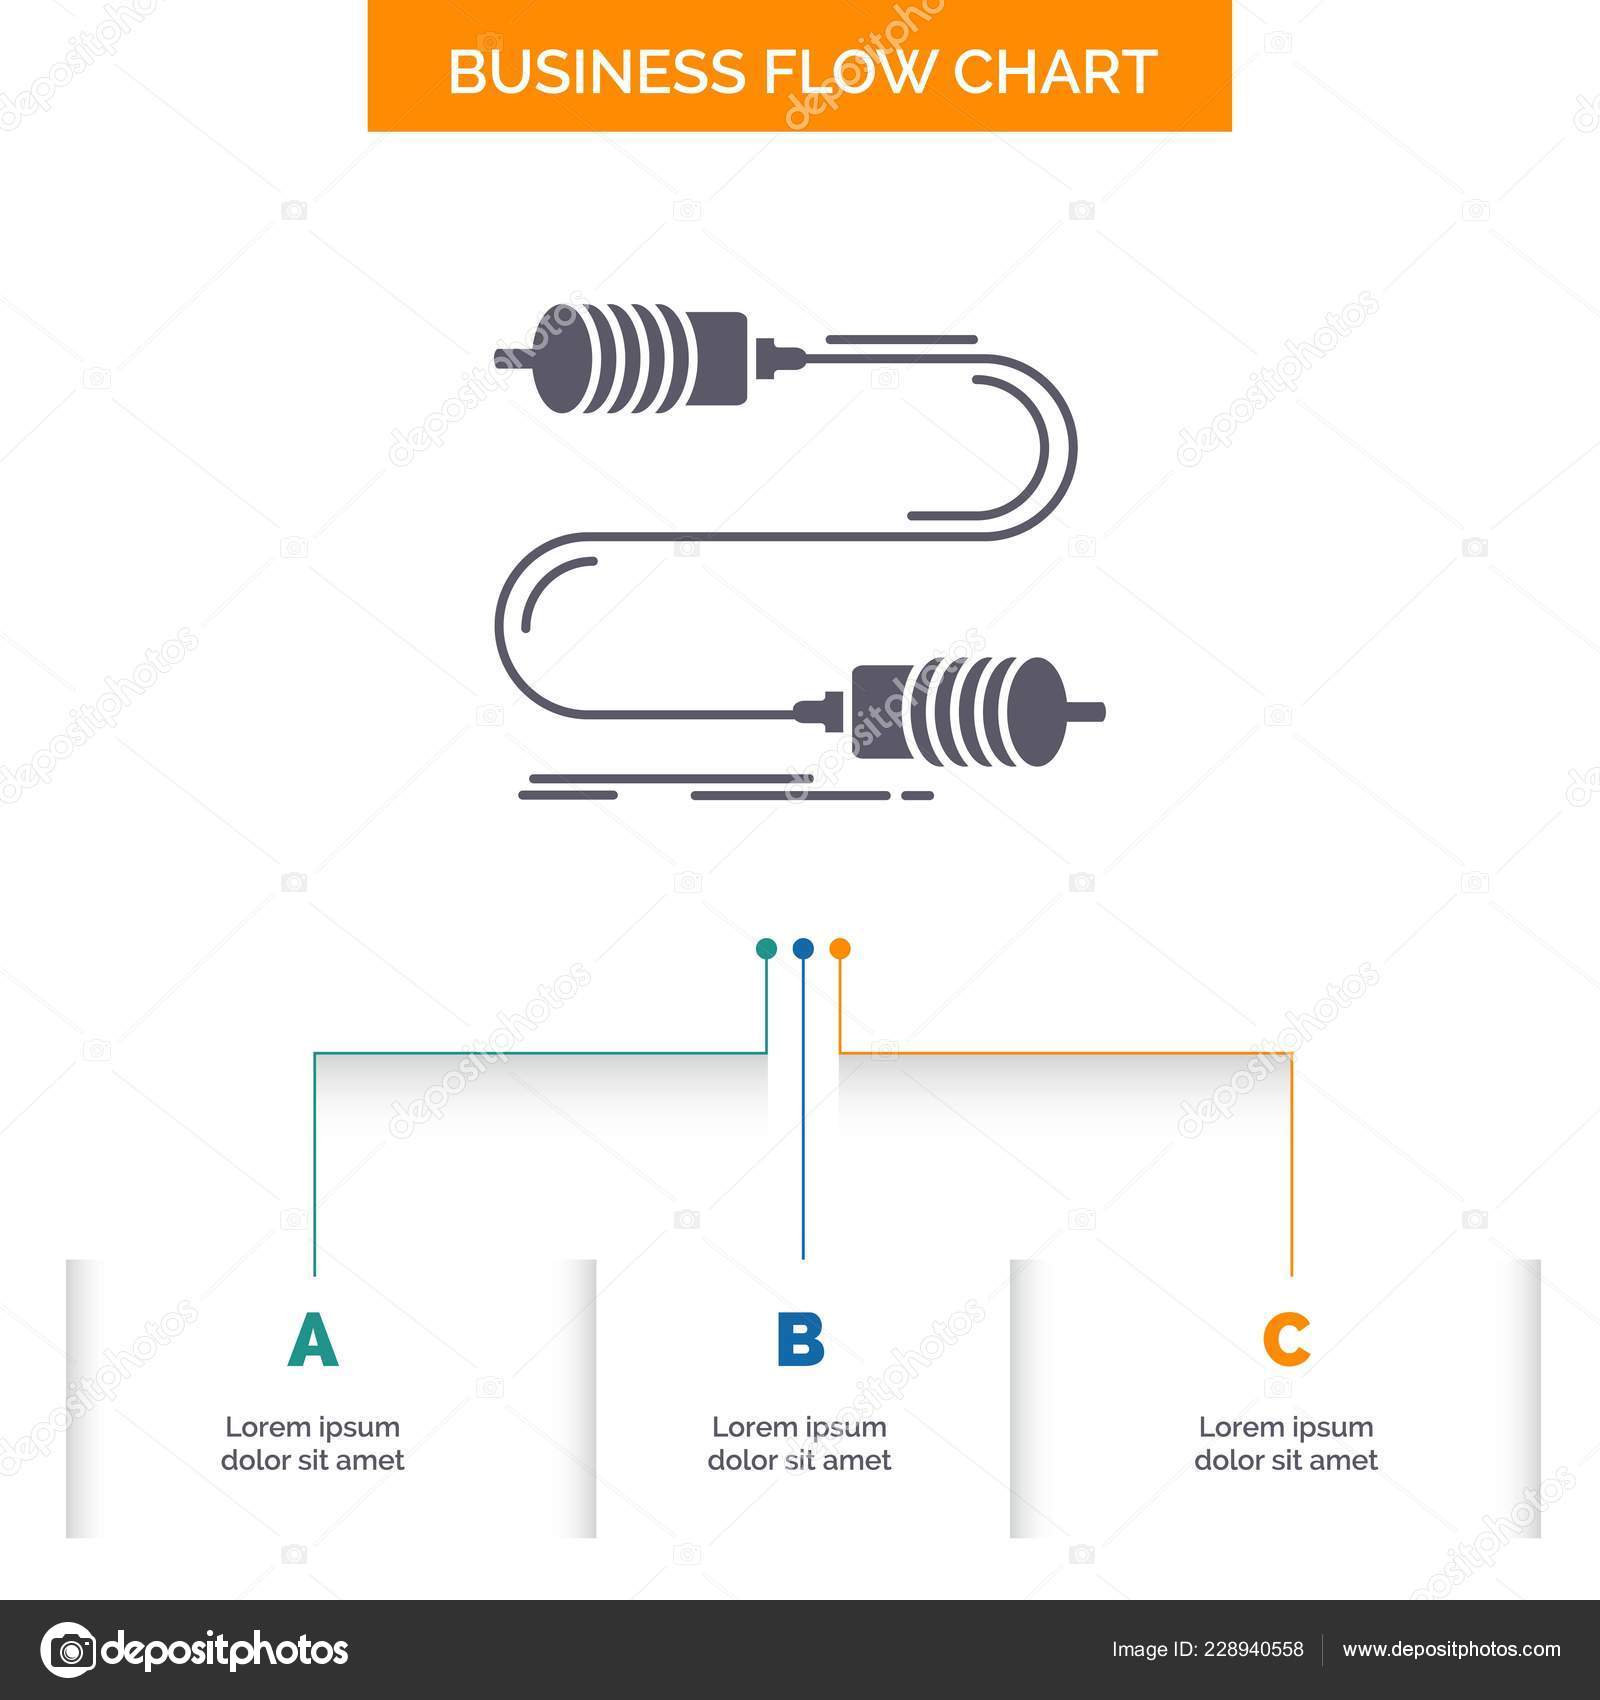 Communication Flow Chart Template from st4.depositphotos.com